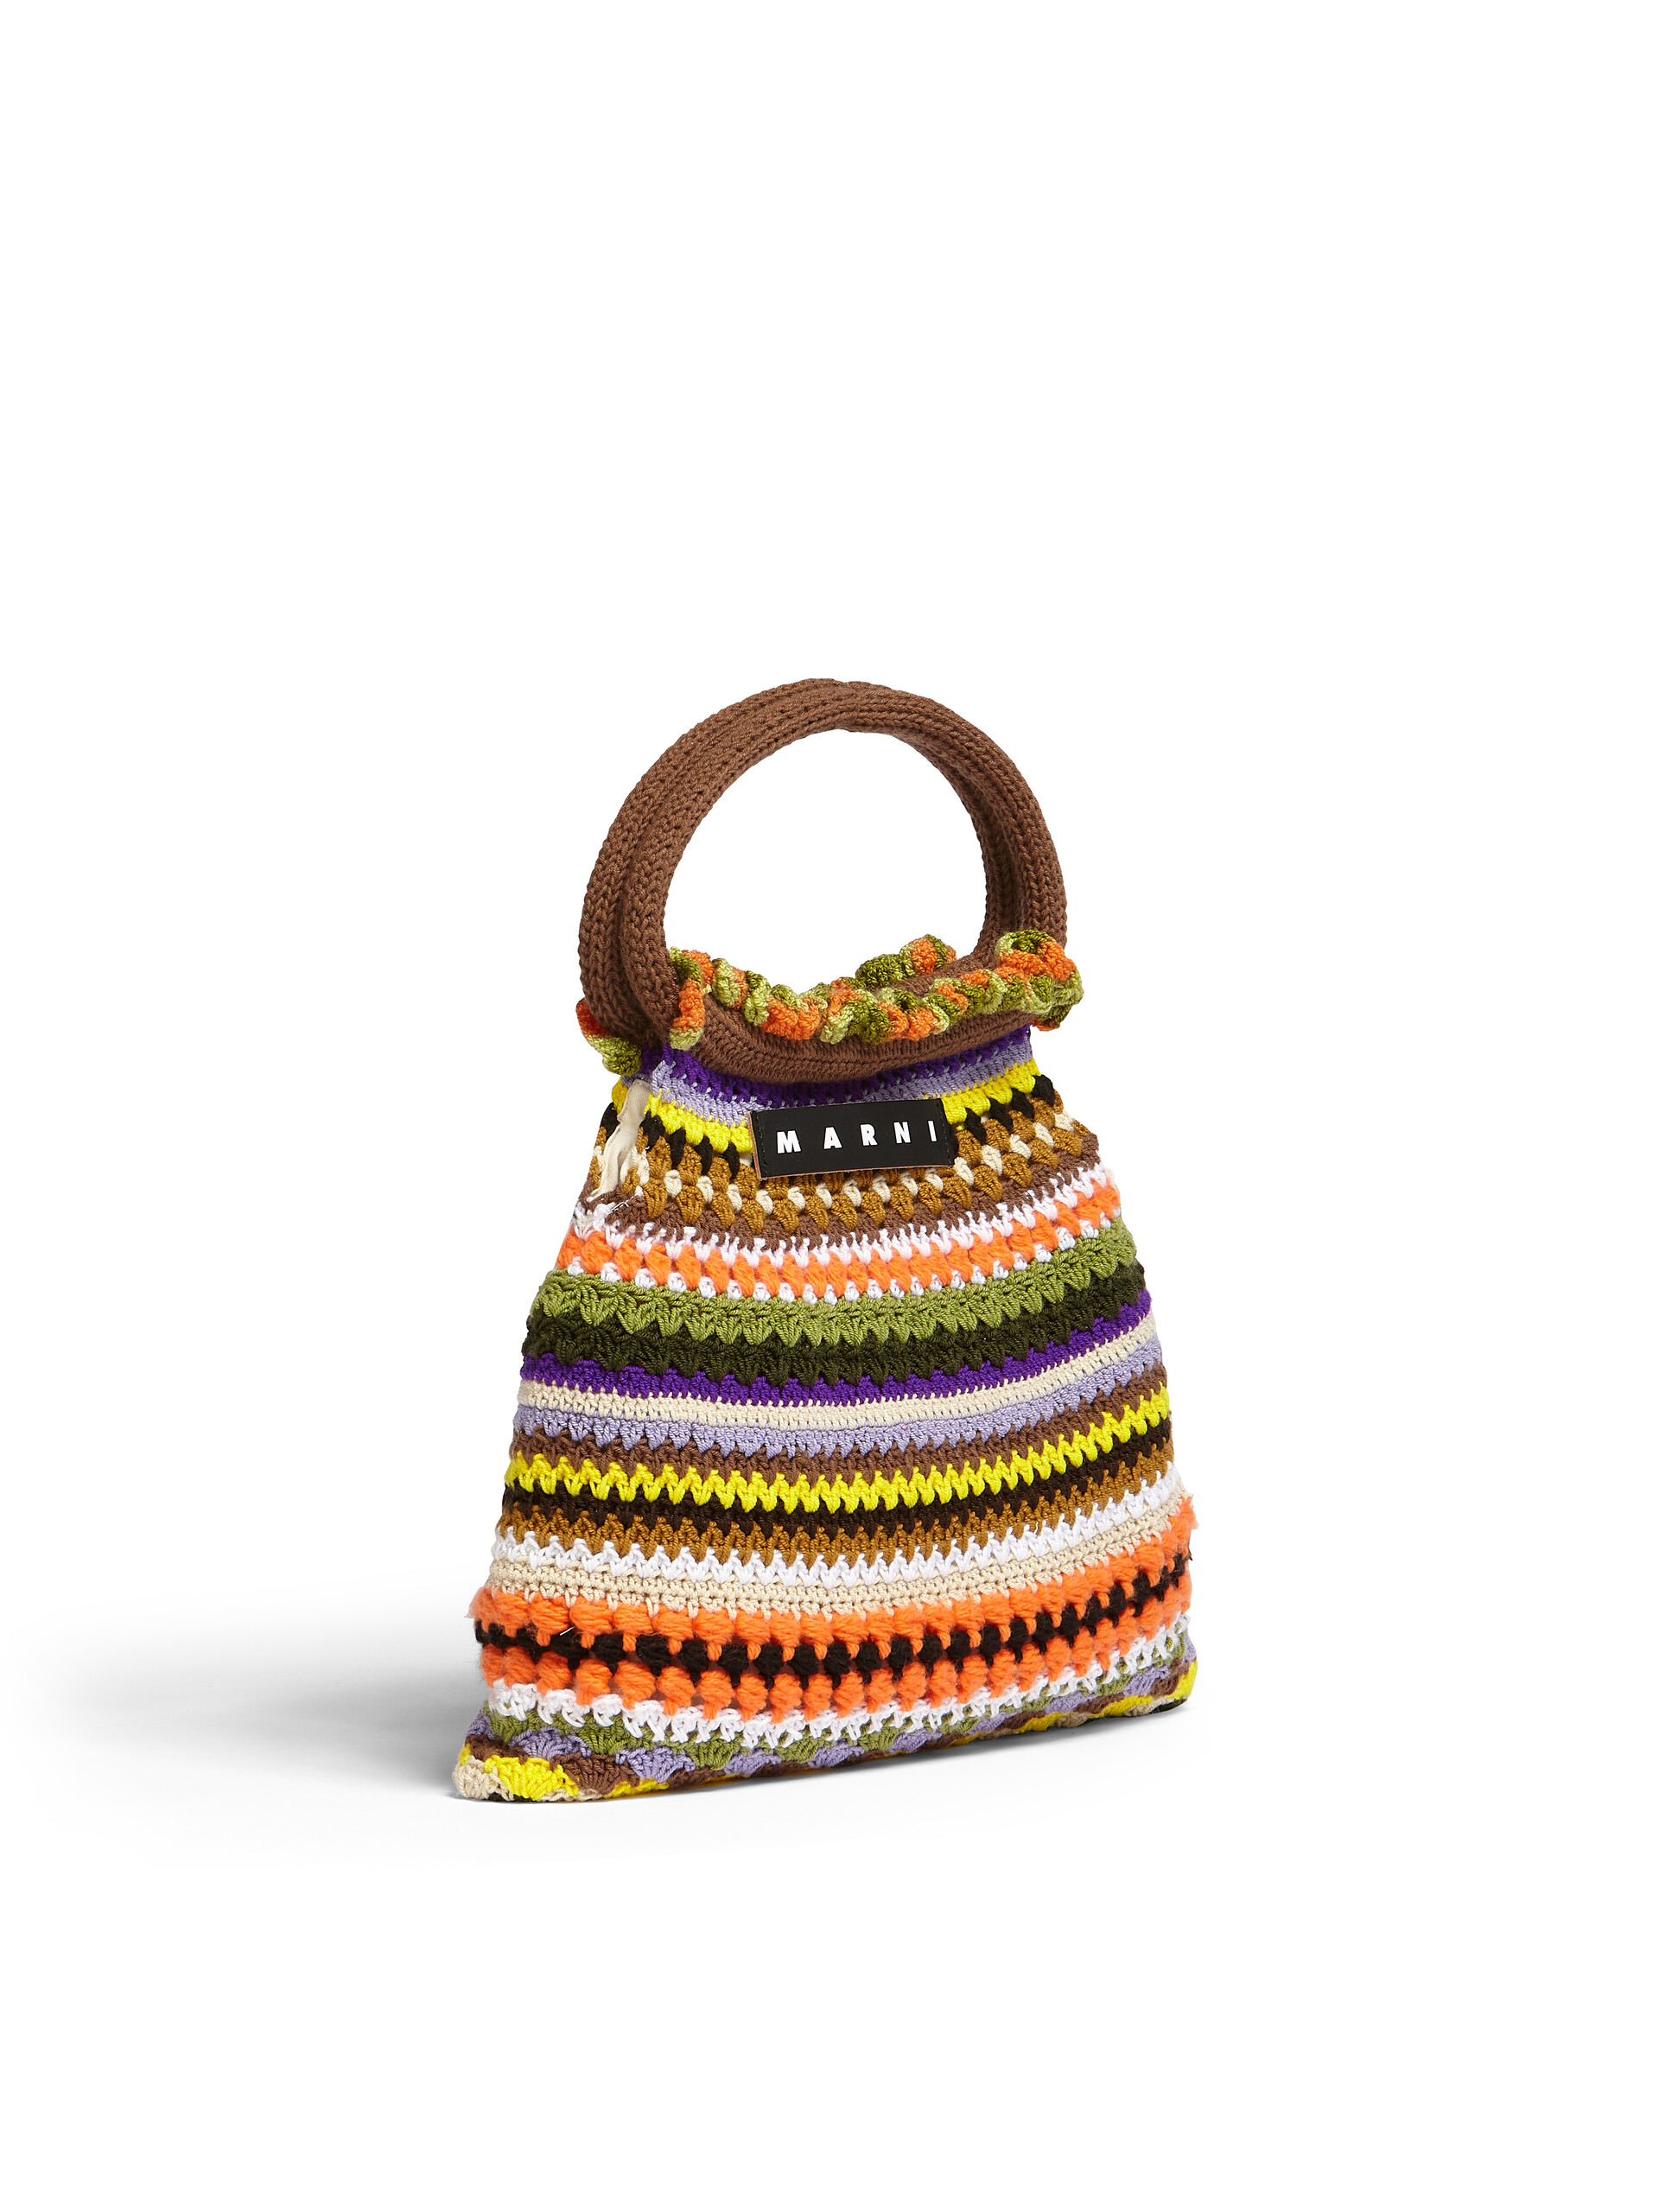 MARNI MARKET GRANNY bag in brown crochet - Bags - Image 2